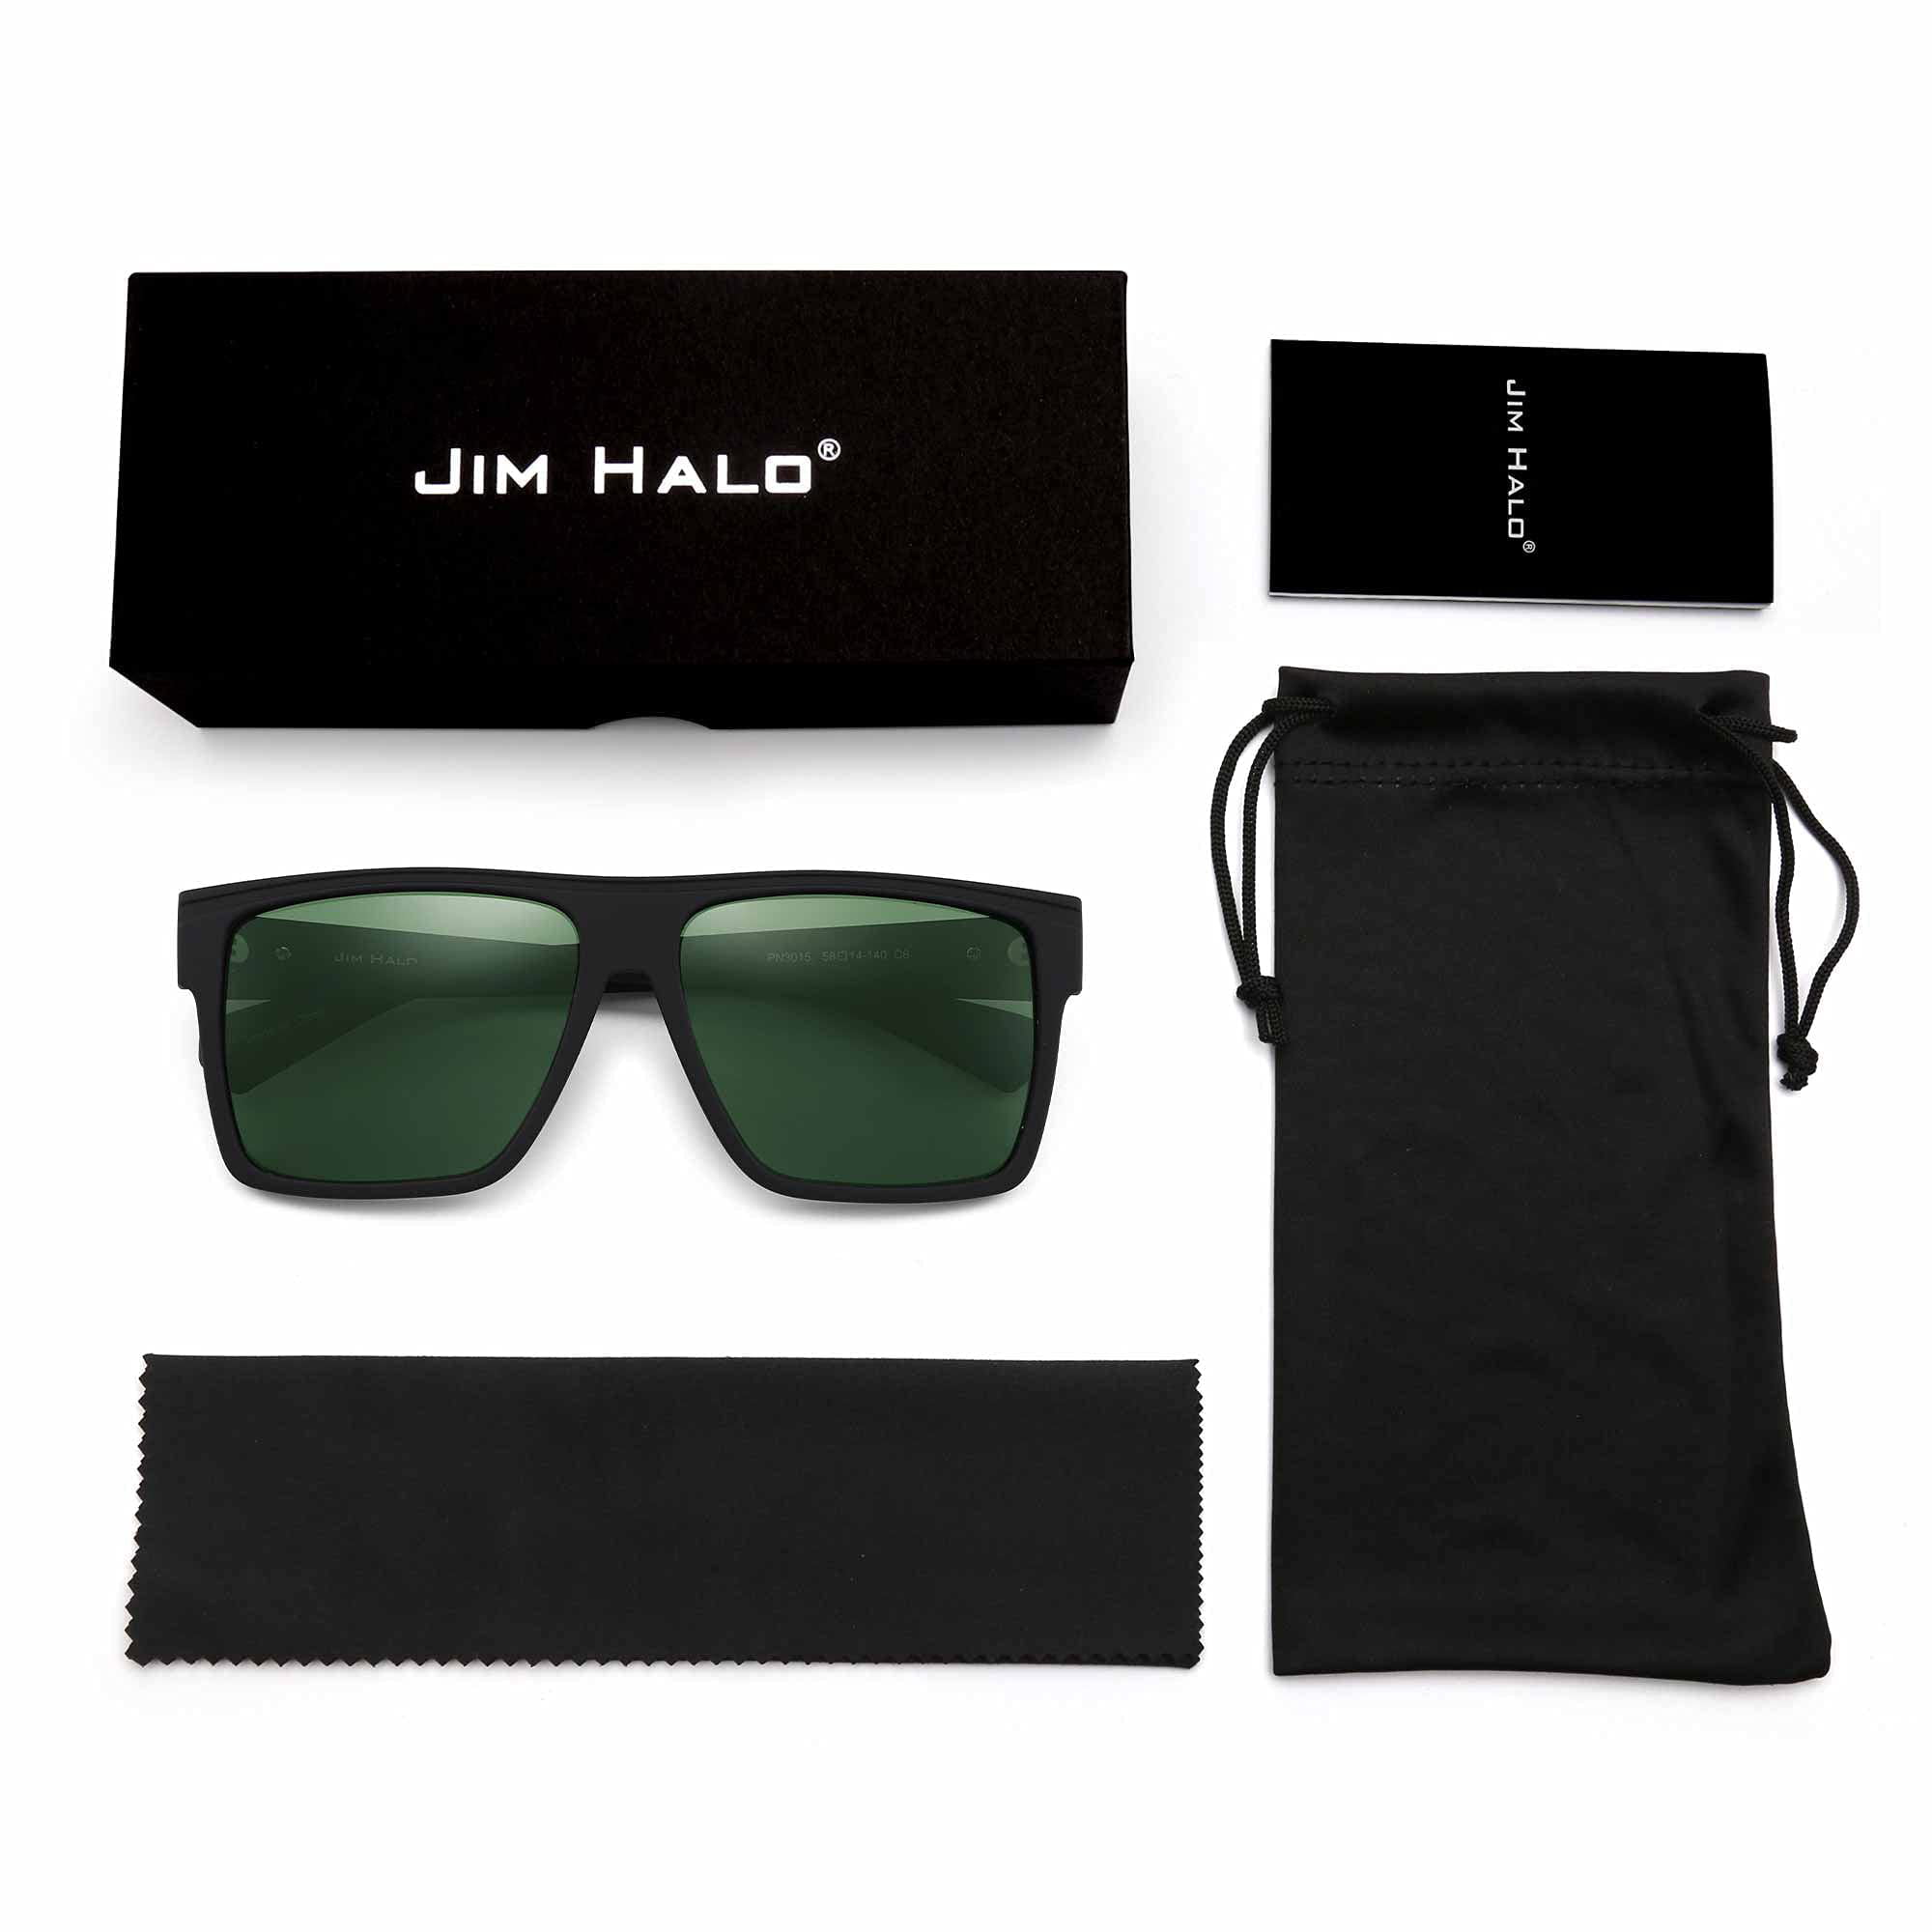 Jim Halo Recycled Polarized Sport Sunglasses Men Women, Classic